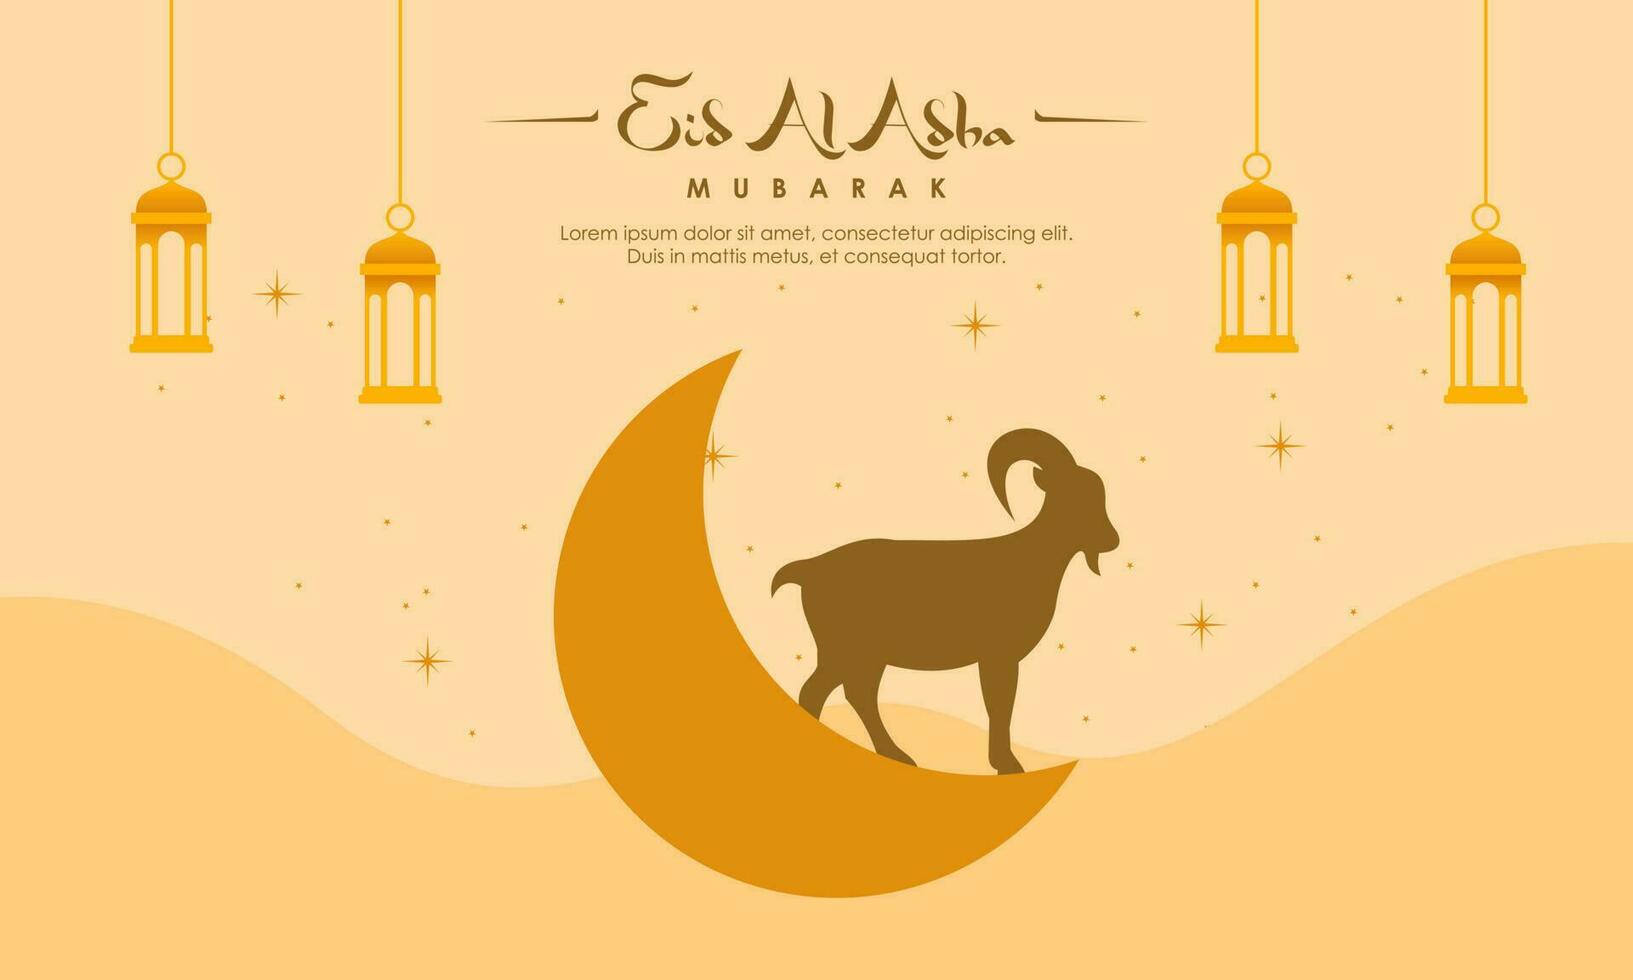 Eid Al Adha Banner Design Vector Illustration. Islamic and Arabic Background for Muslim Community Festival